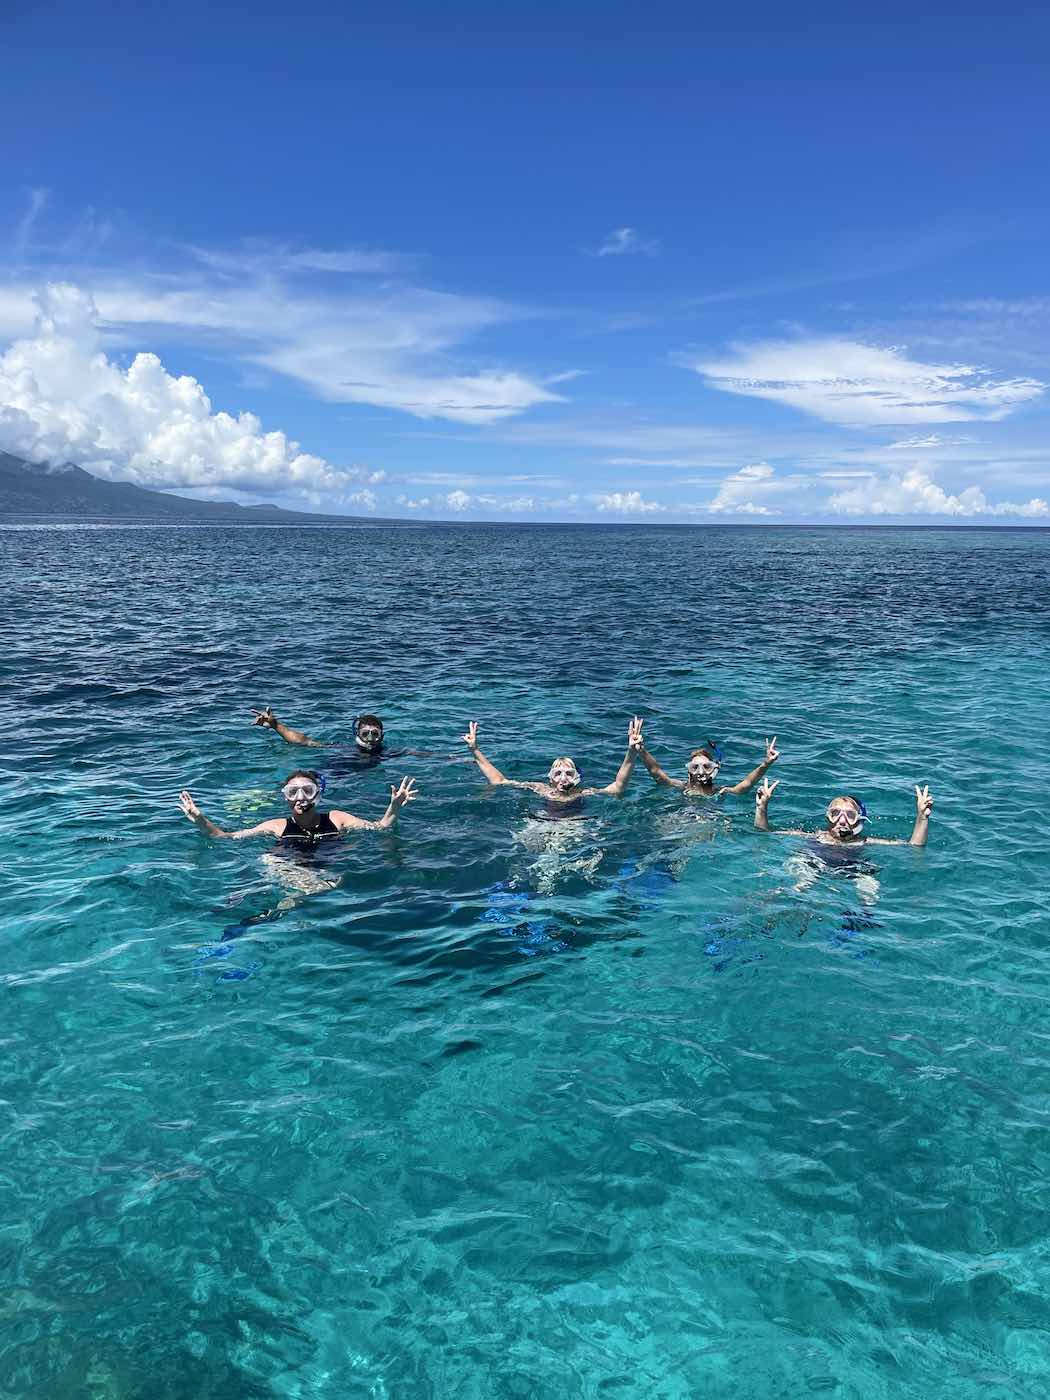 people snorkelling in the crystal clear blue water under blue skies